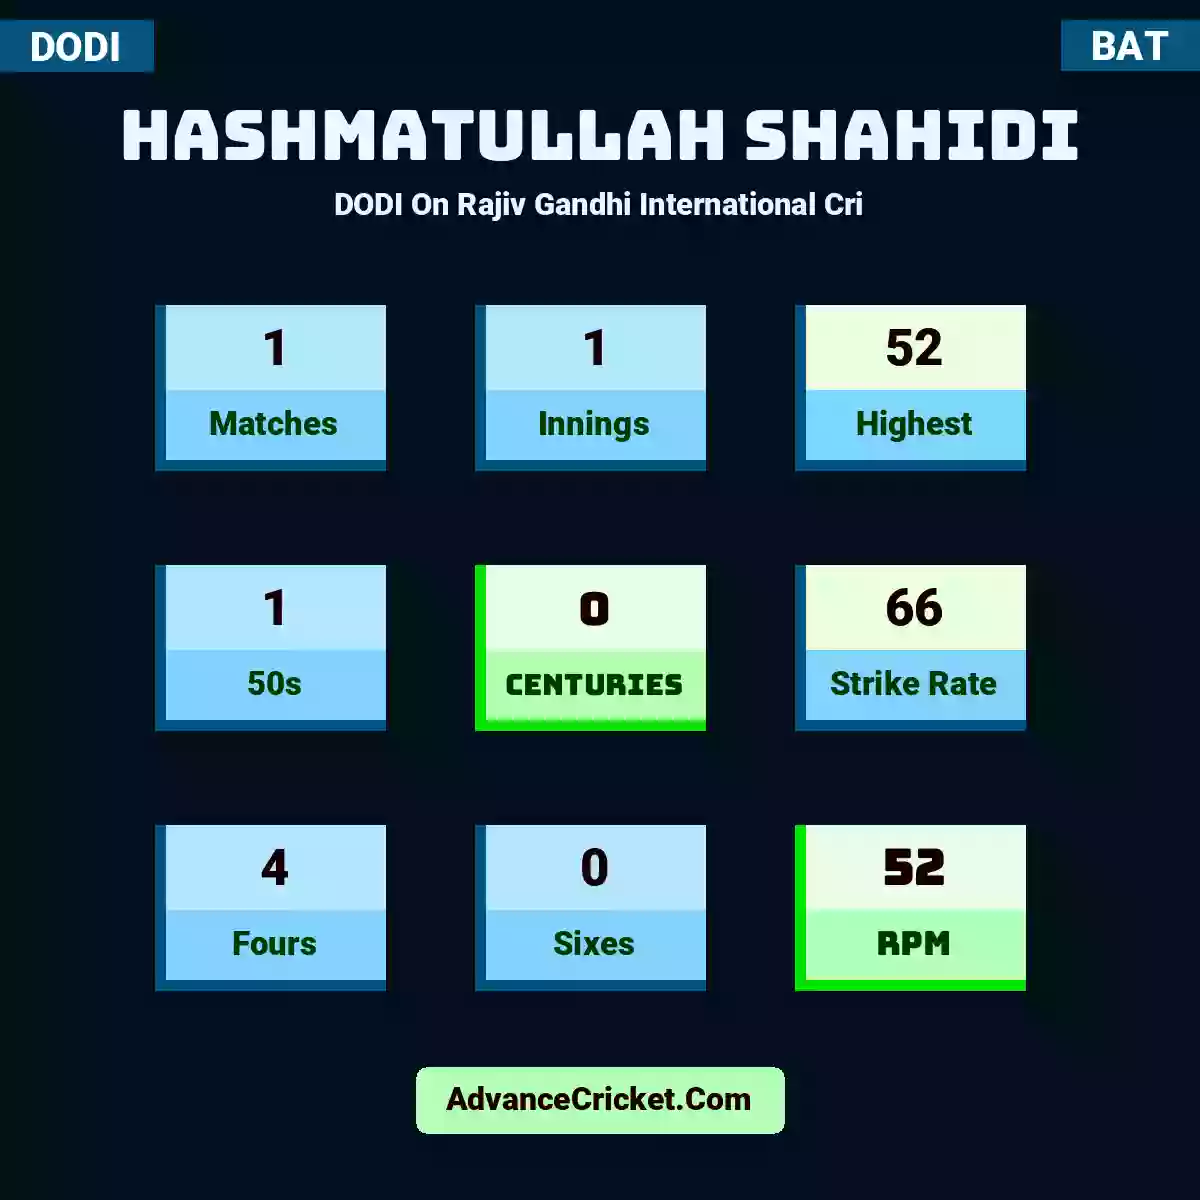 Hashmatullah Shahidi DODI  On Rajiv Gandhi International Cri, Hashmatullah Shahidi played 1 matches, scored 52 runs as highest, 1 half-centuries, and 0 centuries, with a strike rate of 66. H.Shahidi hit 4 fours and 0 sixes, with an RPM of 52.